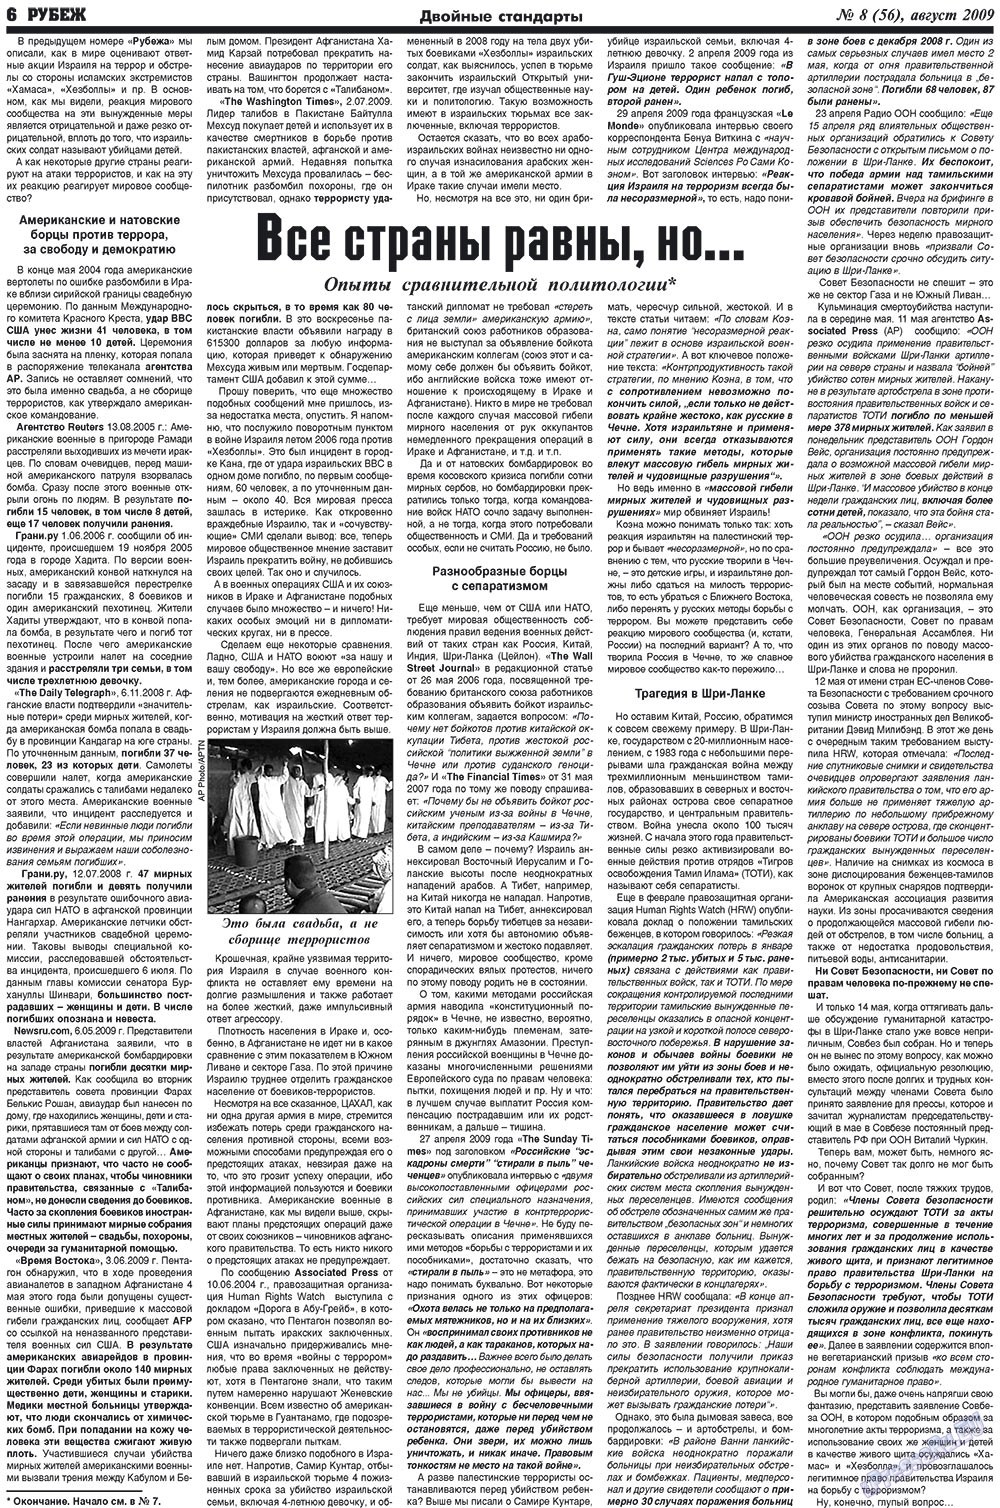 Рубеж, газета. 2009 №8 стр.6